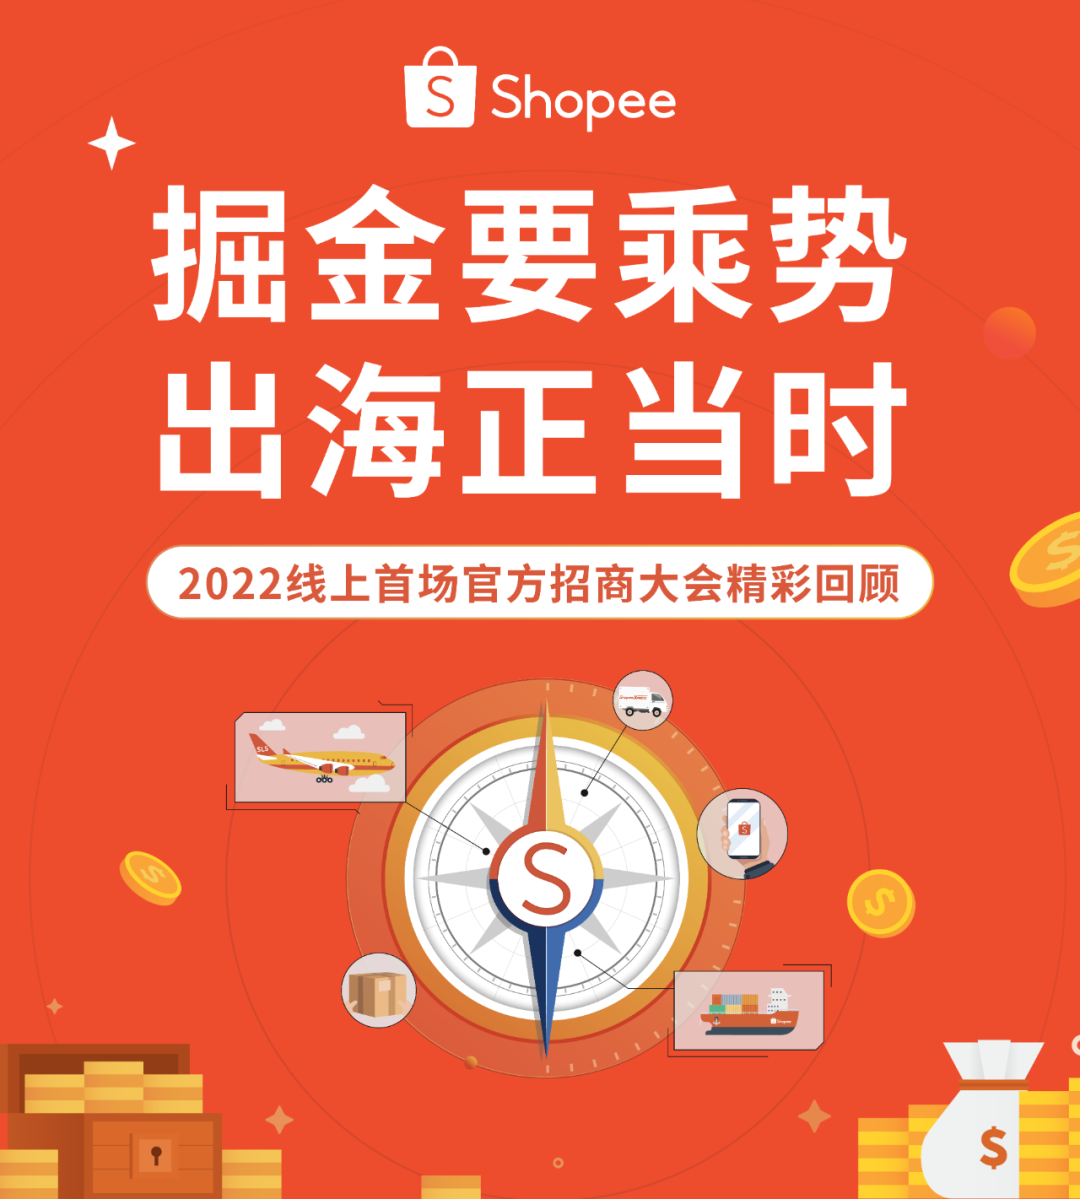 Shopee 2022首场招商大会回顾: 快来领取最新入驻政策、选品秘籍等干货